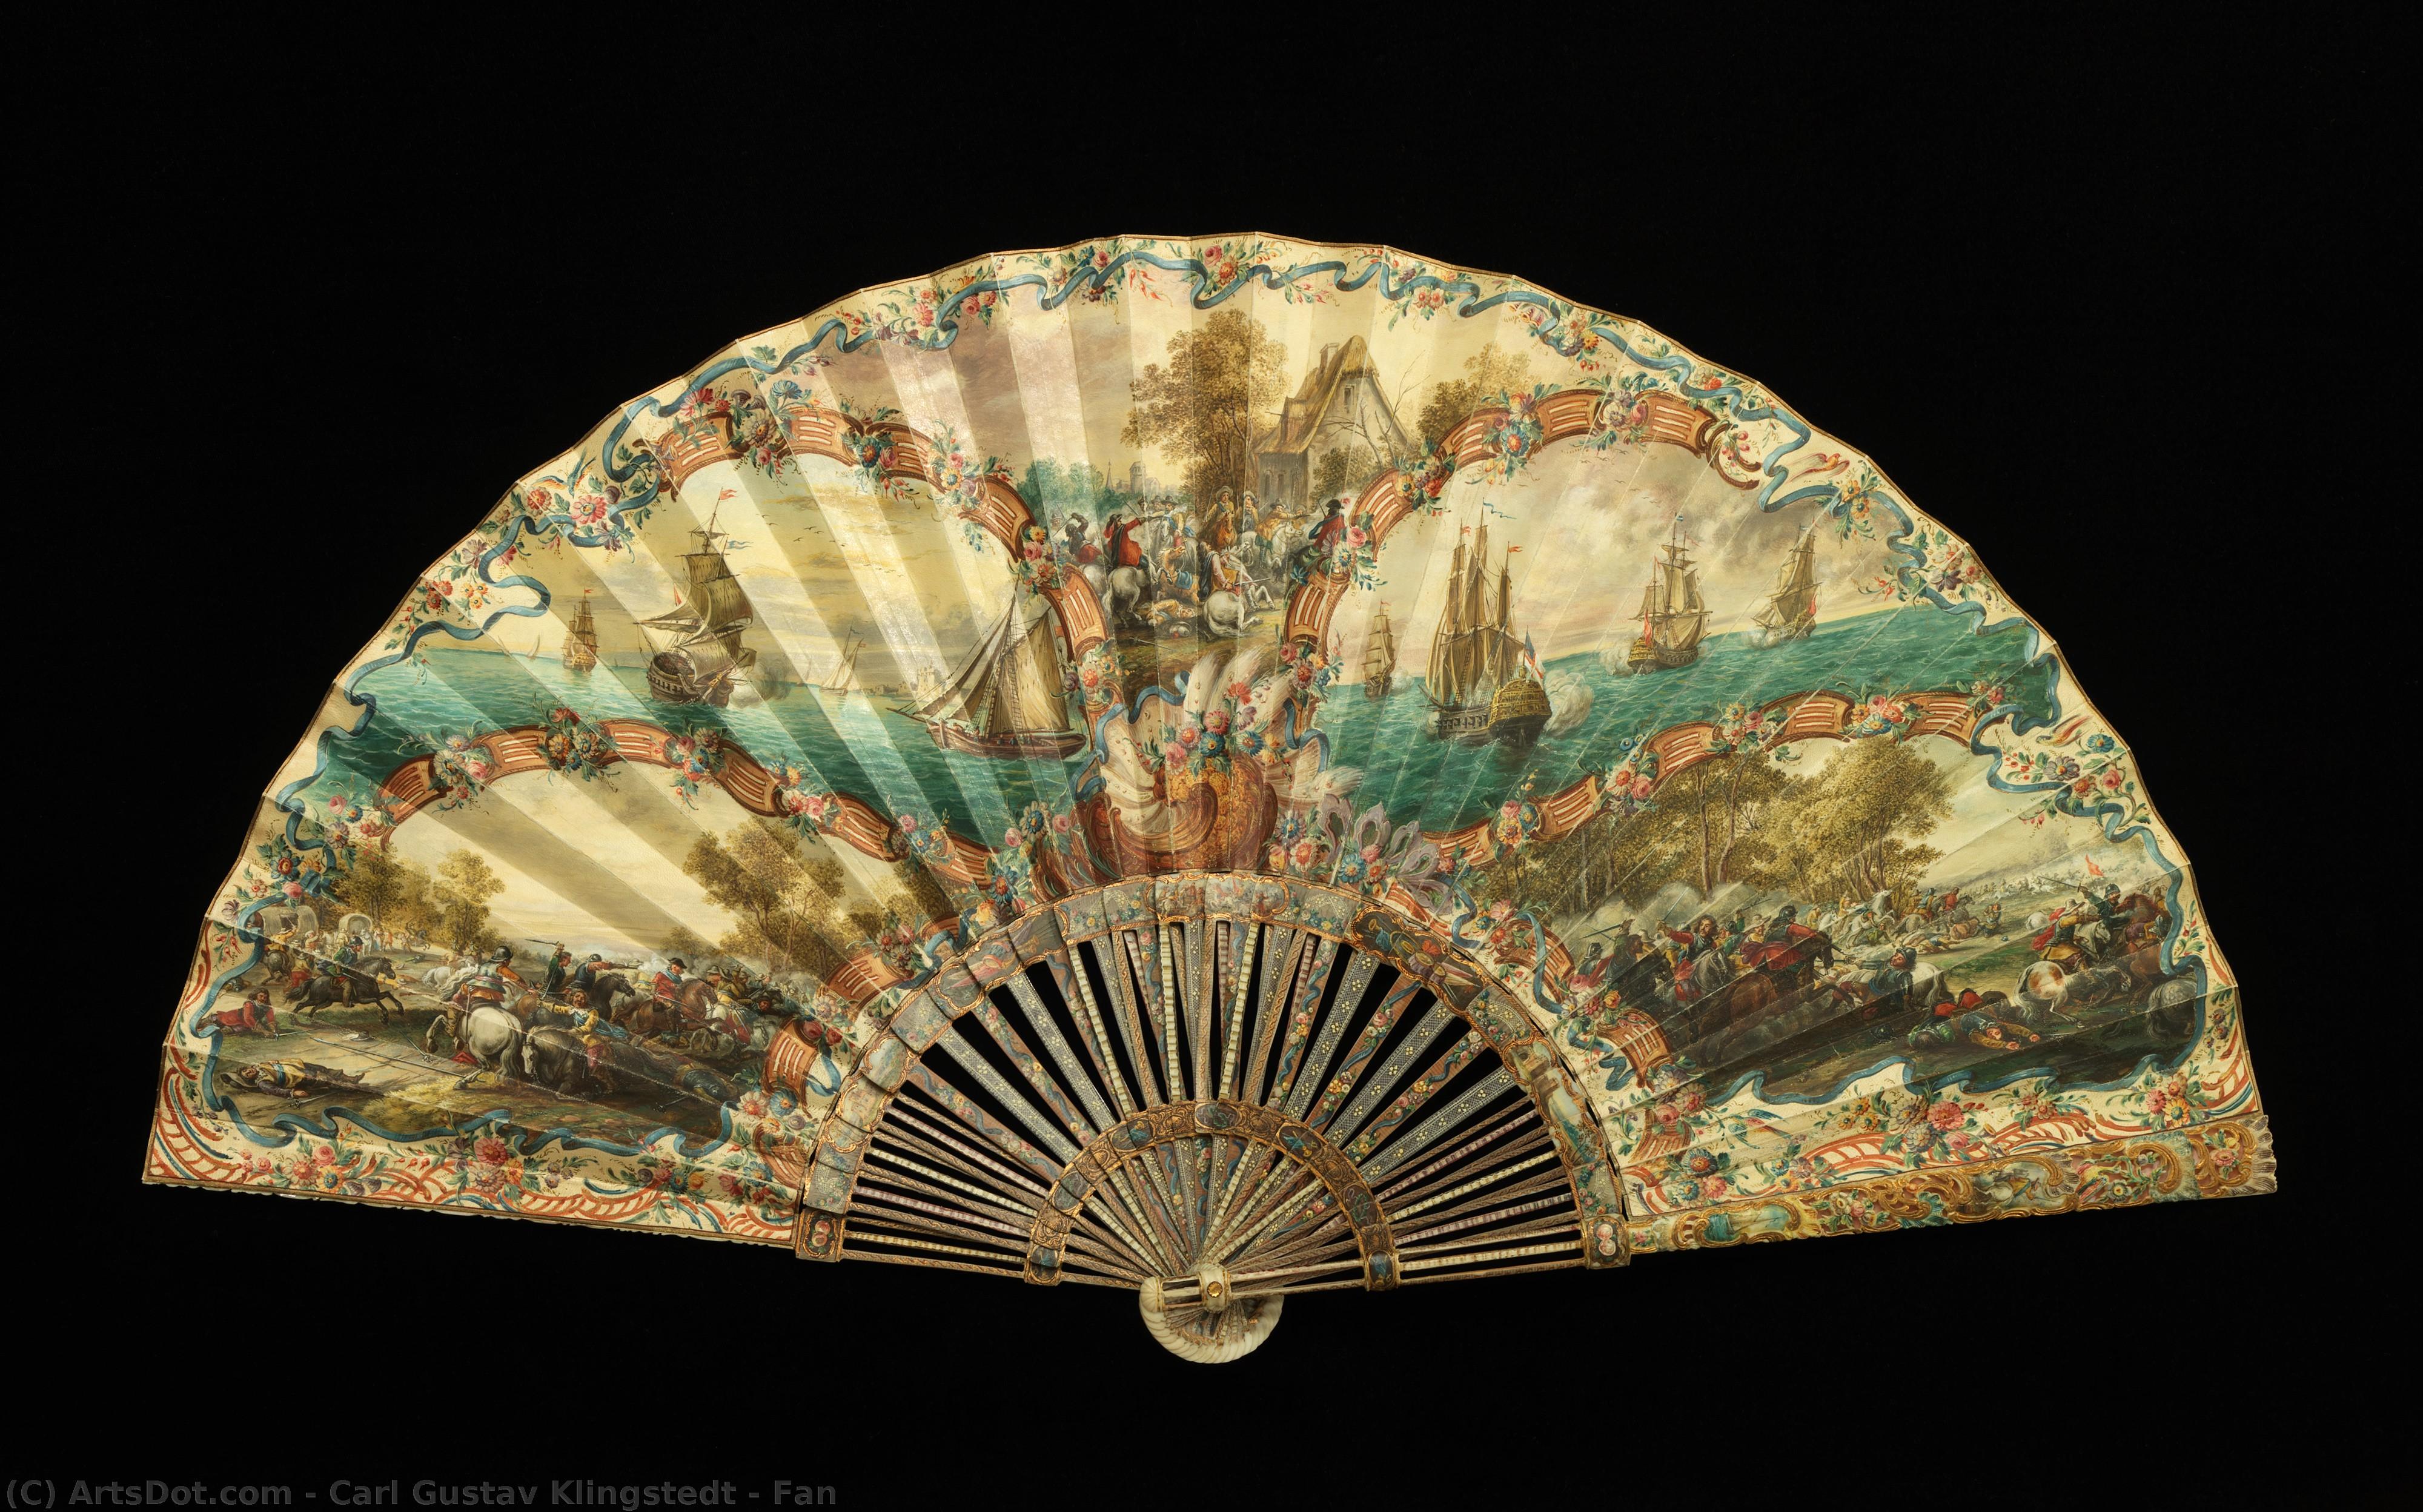  Museum Art Reproductions Fan, 1715 by Carl Gustav Klingstedt (1697-1765, Sweden) | ArtsDot.com